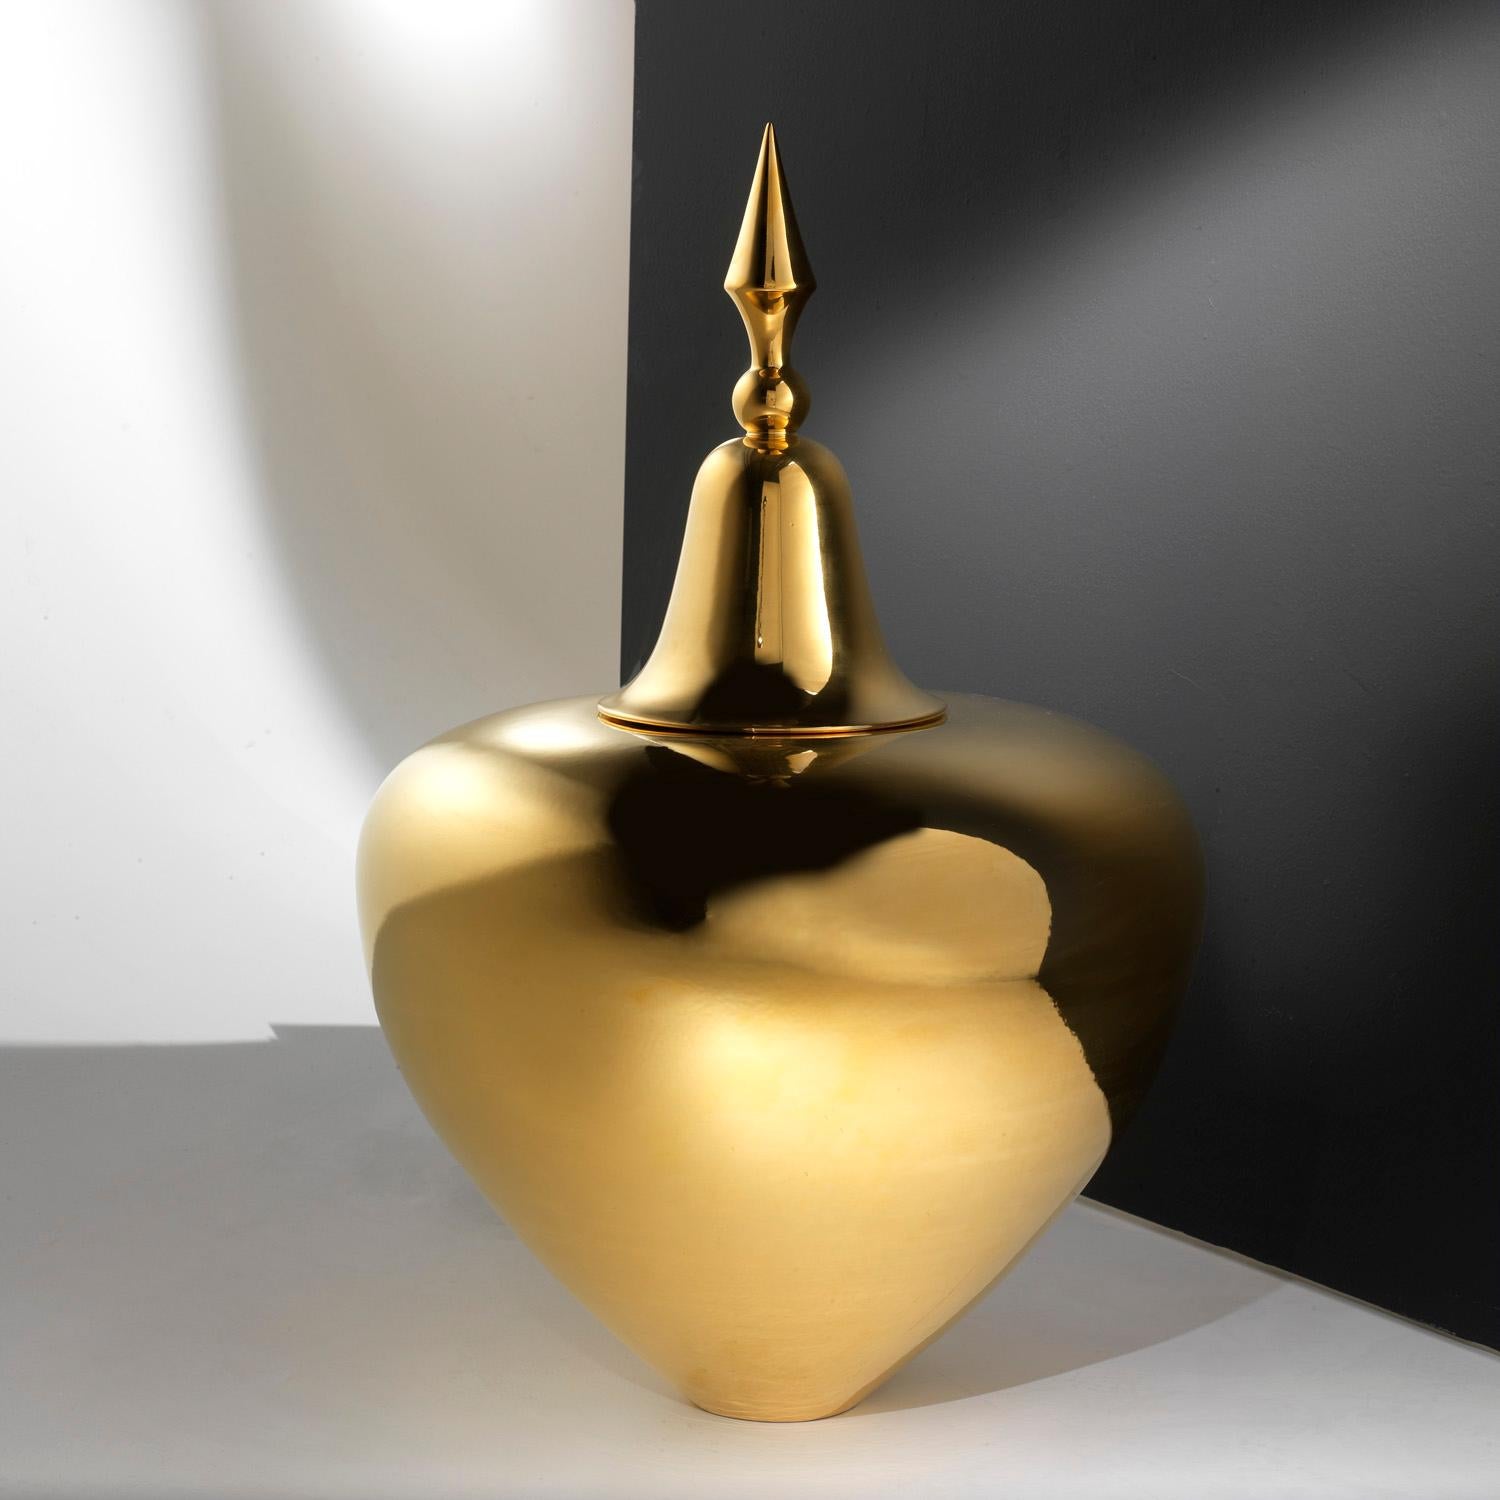 Ceramic vase handcrafted in 24-karat gold
ASHA - code VS080, 
measures: height 98.0 cm., diameter 58.0 cm.